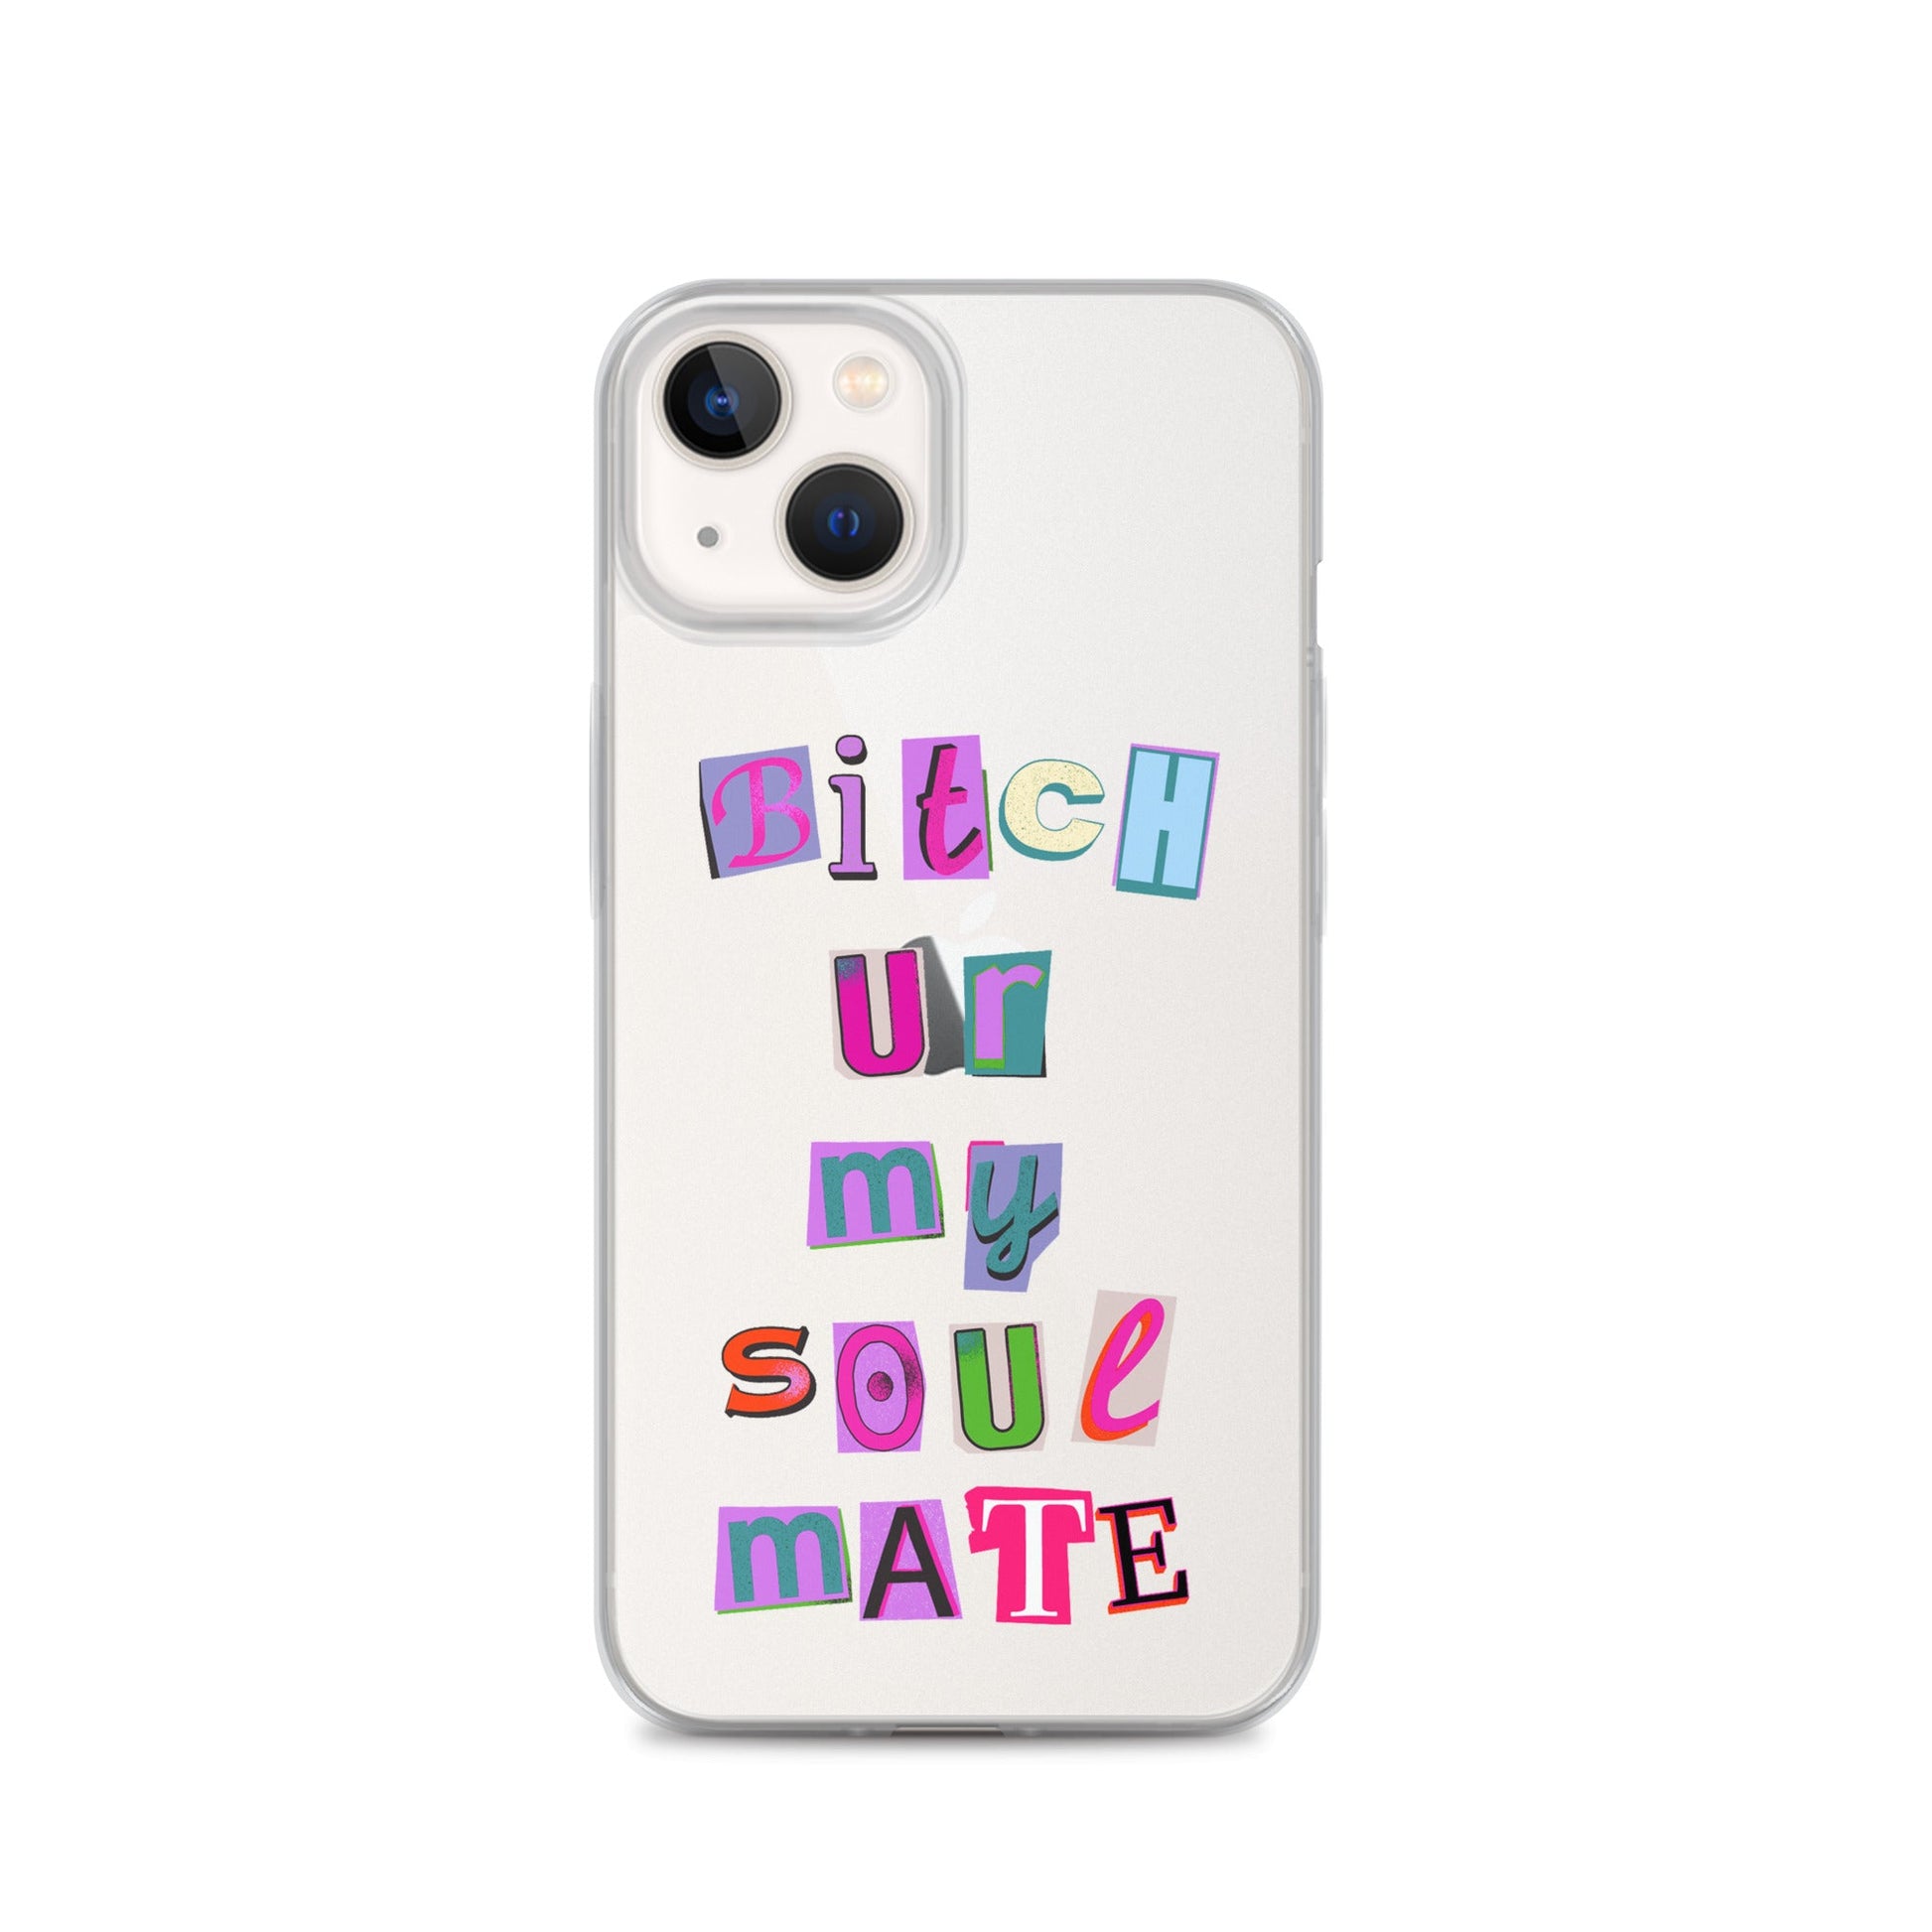 Soulmate iPhone Case - blunt cases